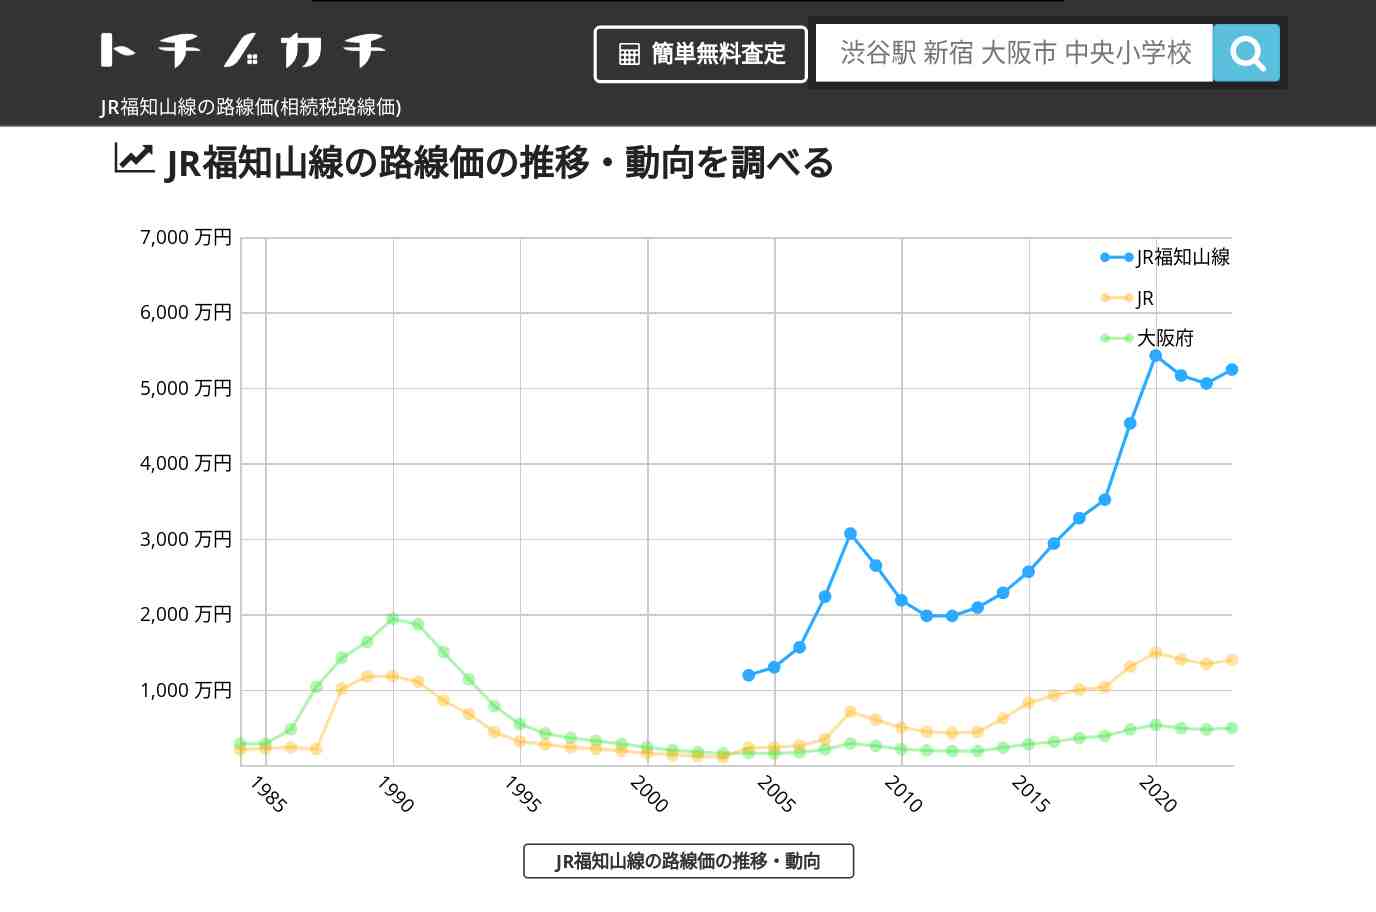 JR福知山線(JR)の路線価(相続税路線価) | トチノカチ